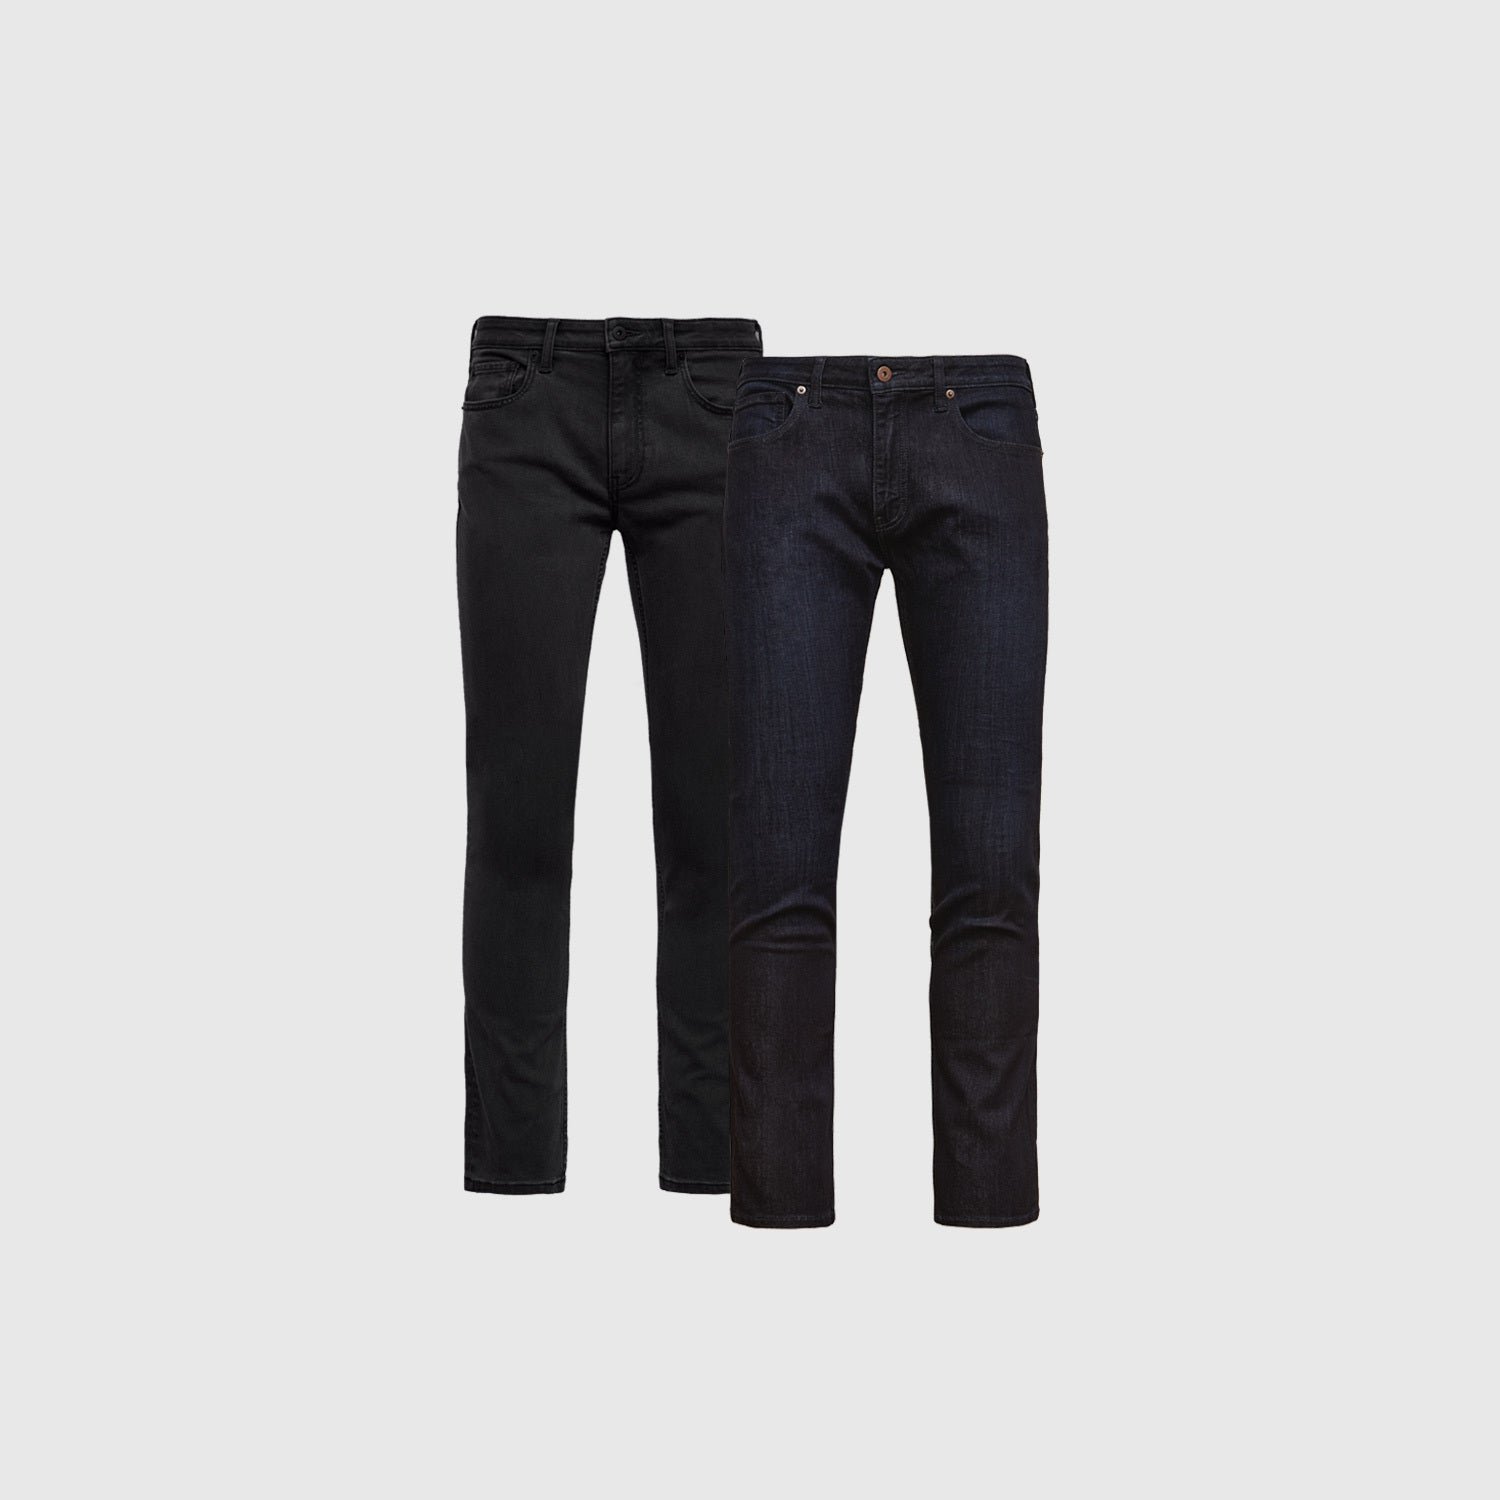 Indigo and Black Slim Fit Comfort Jeans 2-Pack